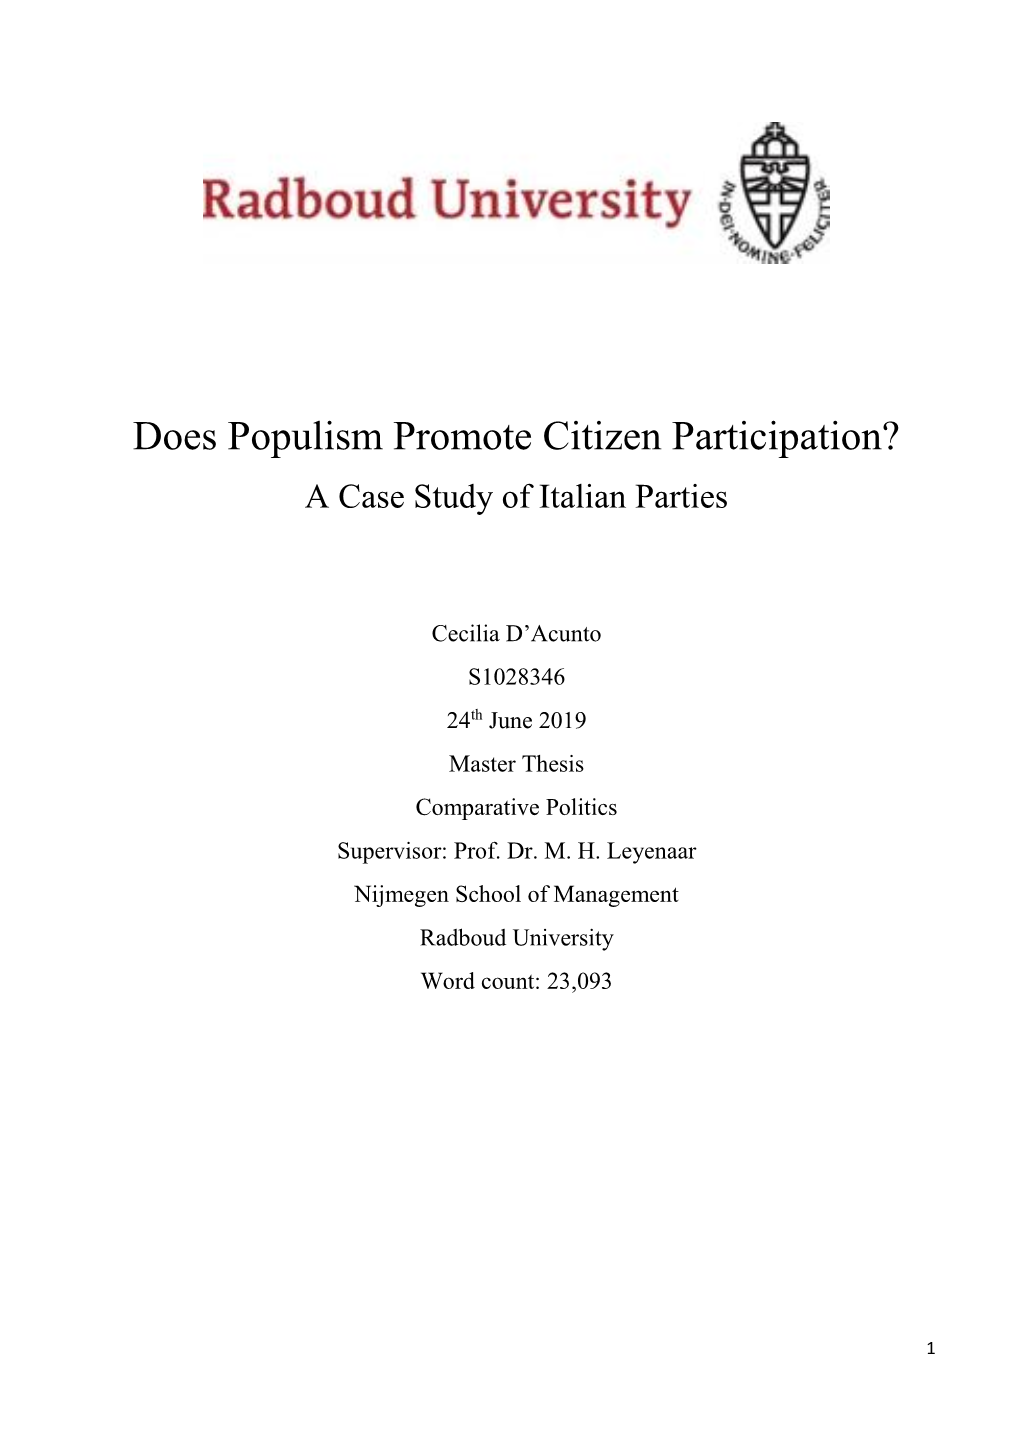 Does Populism Promote Citizen Participation? a Case Study of Italian Parties